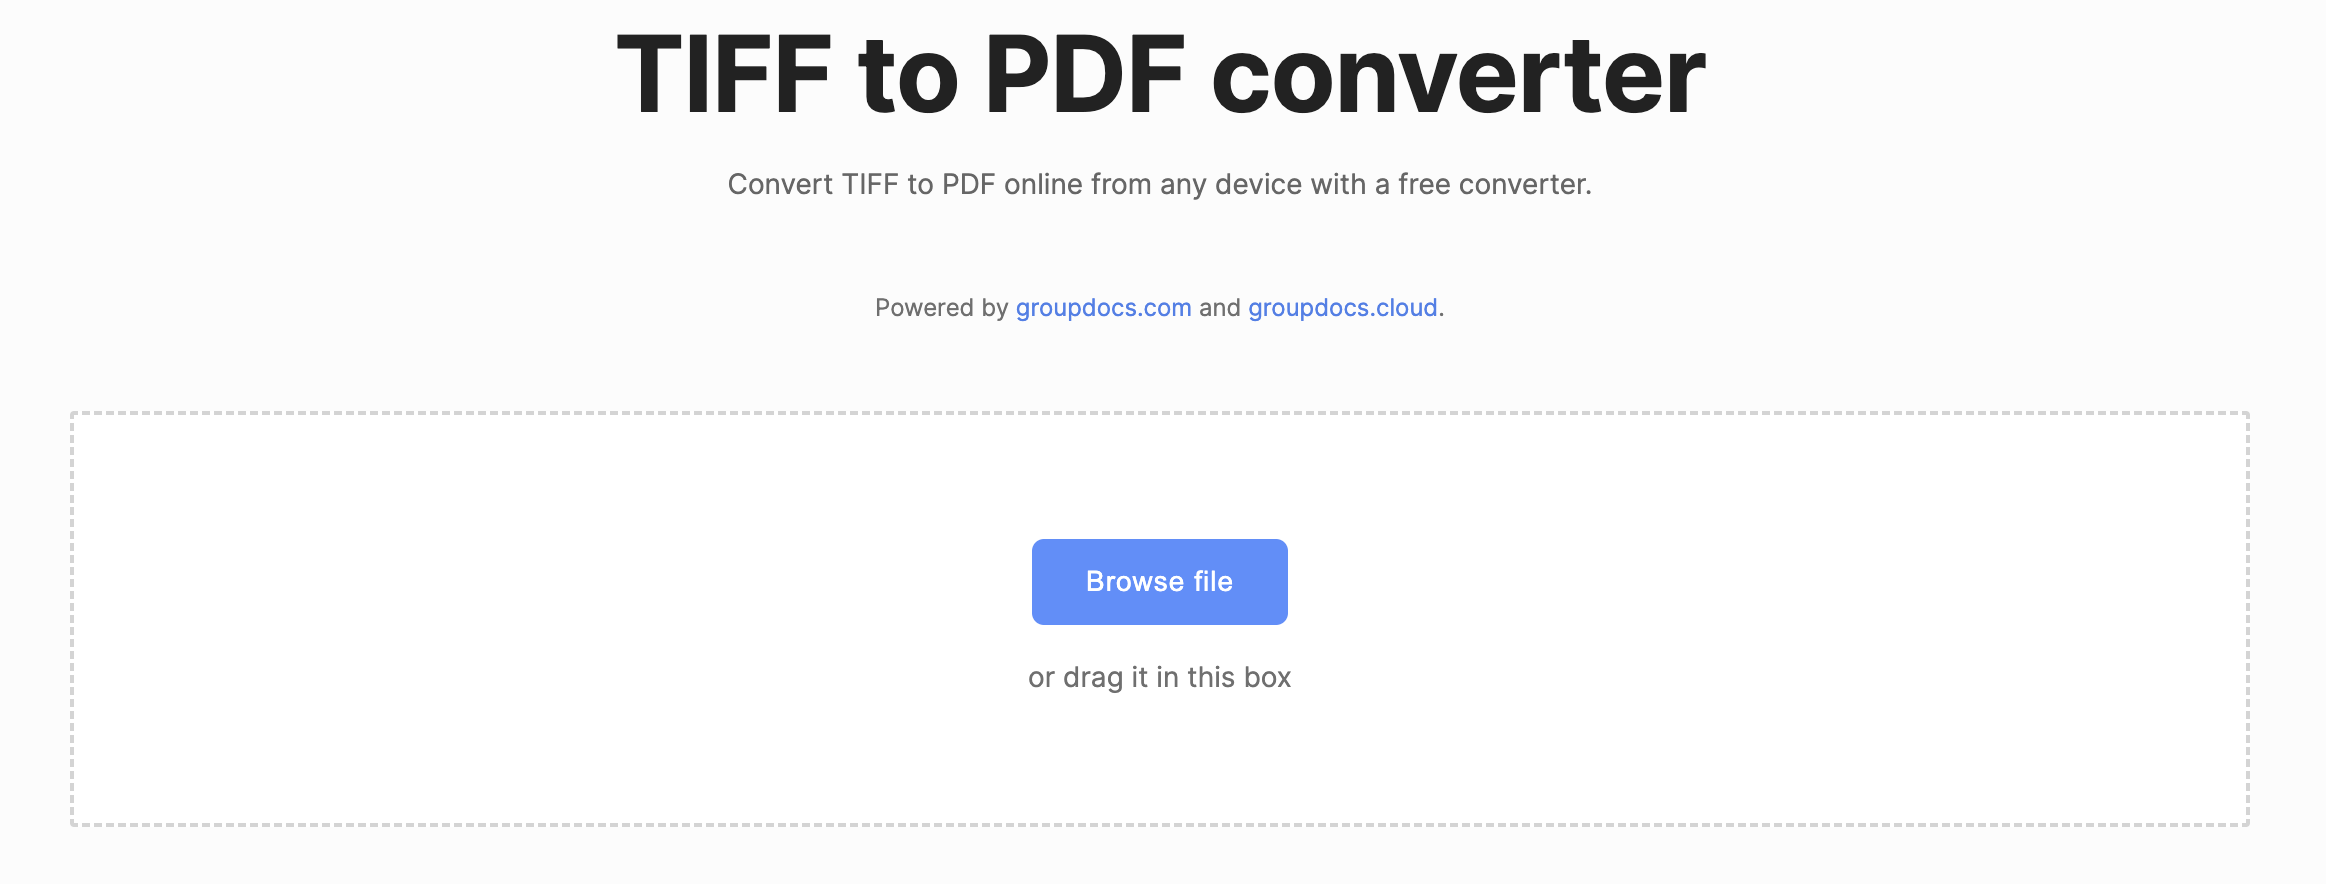 TIFF to PDF converter